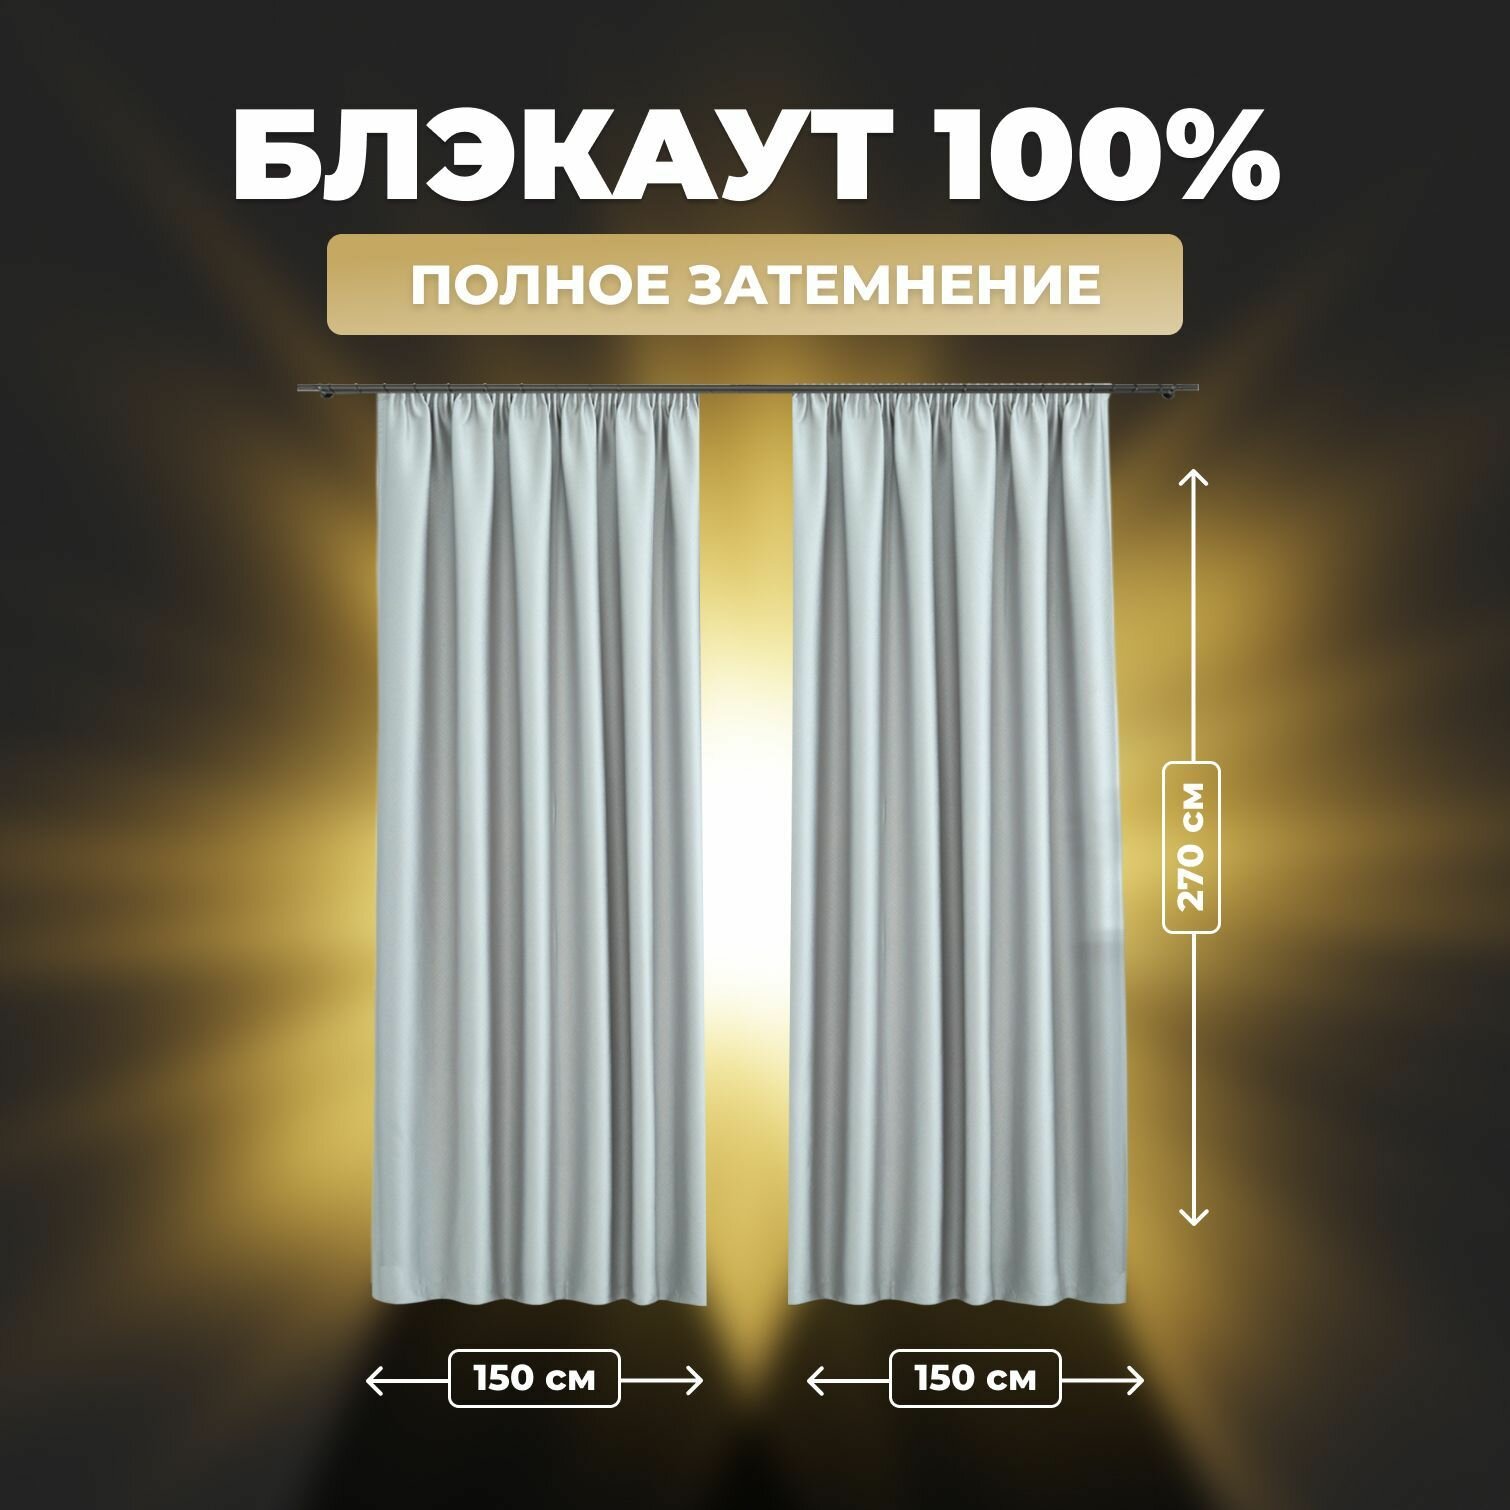 Комплект штор для комнаты Shtoraland Блэкаут 100%, светло-серый, 150x270 см - 2 шт, однотонные светонепроницаемые.